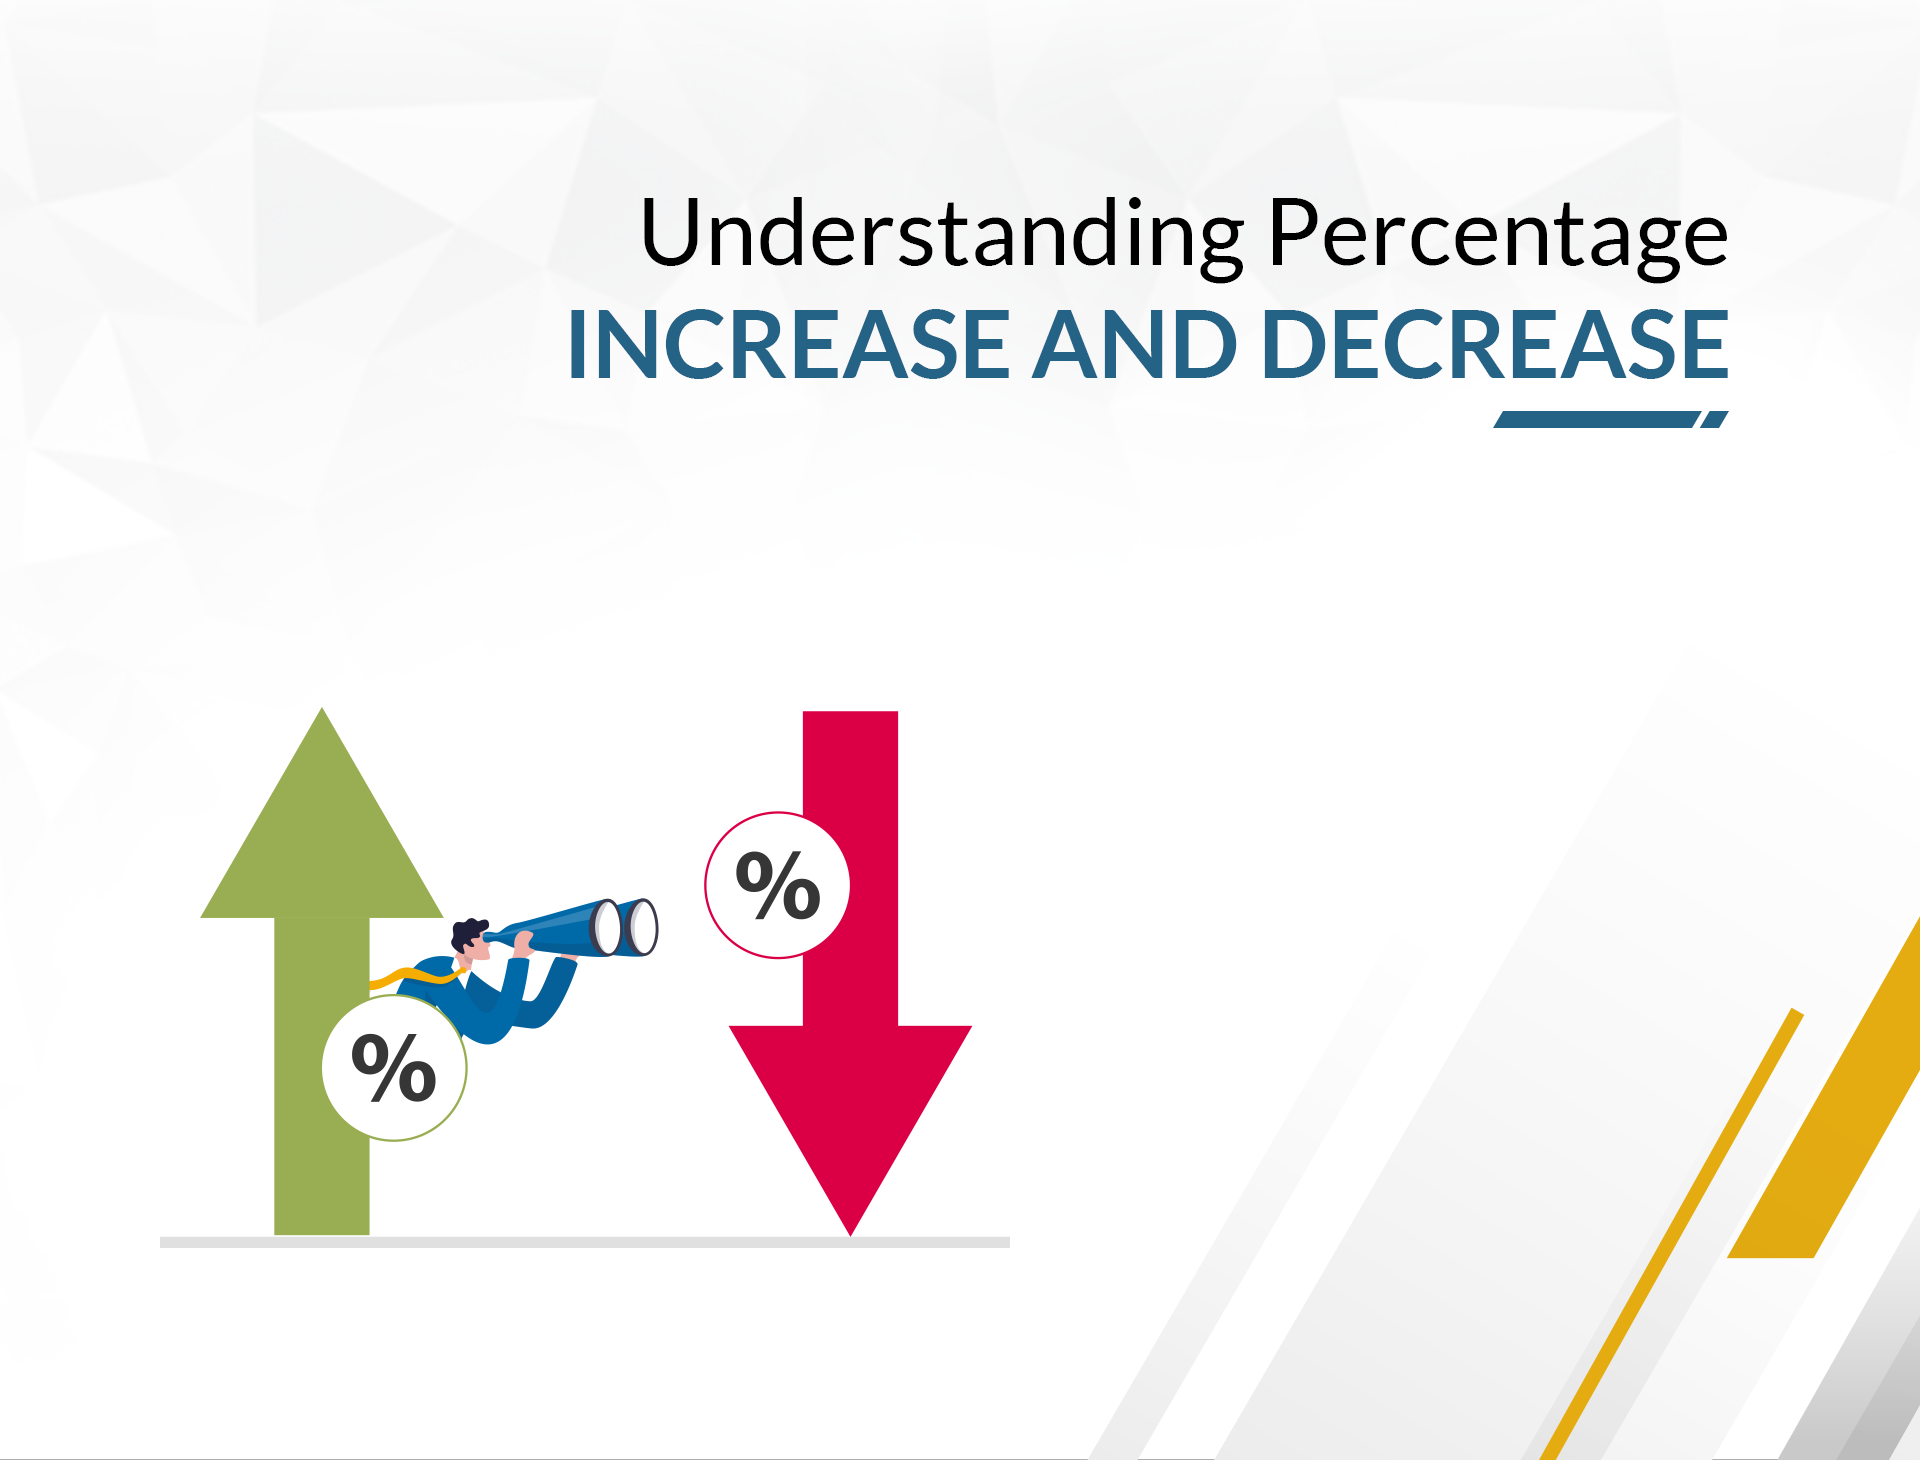 Understanding Percentage Increase and Decrease